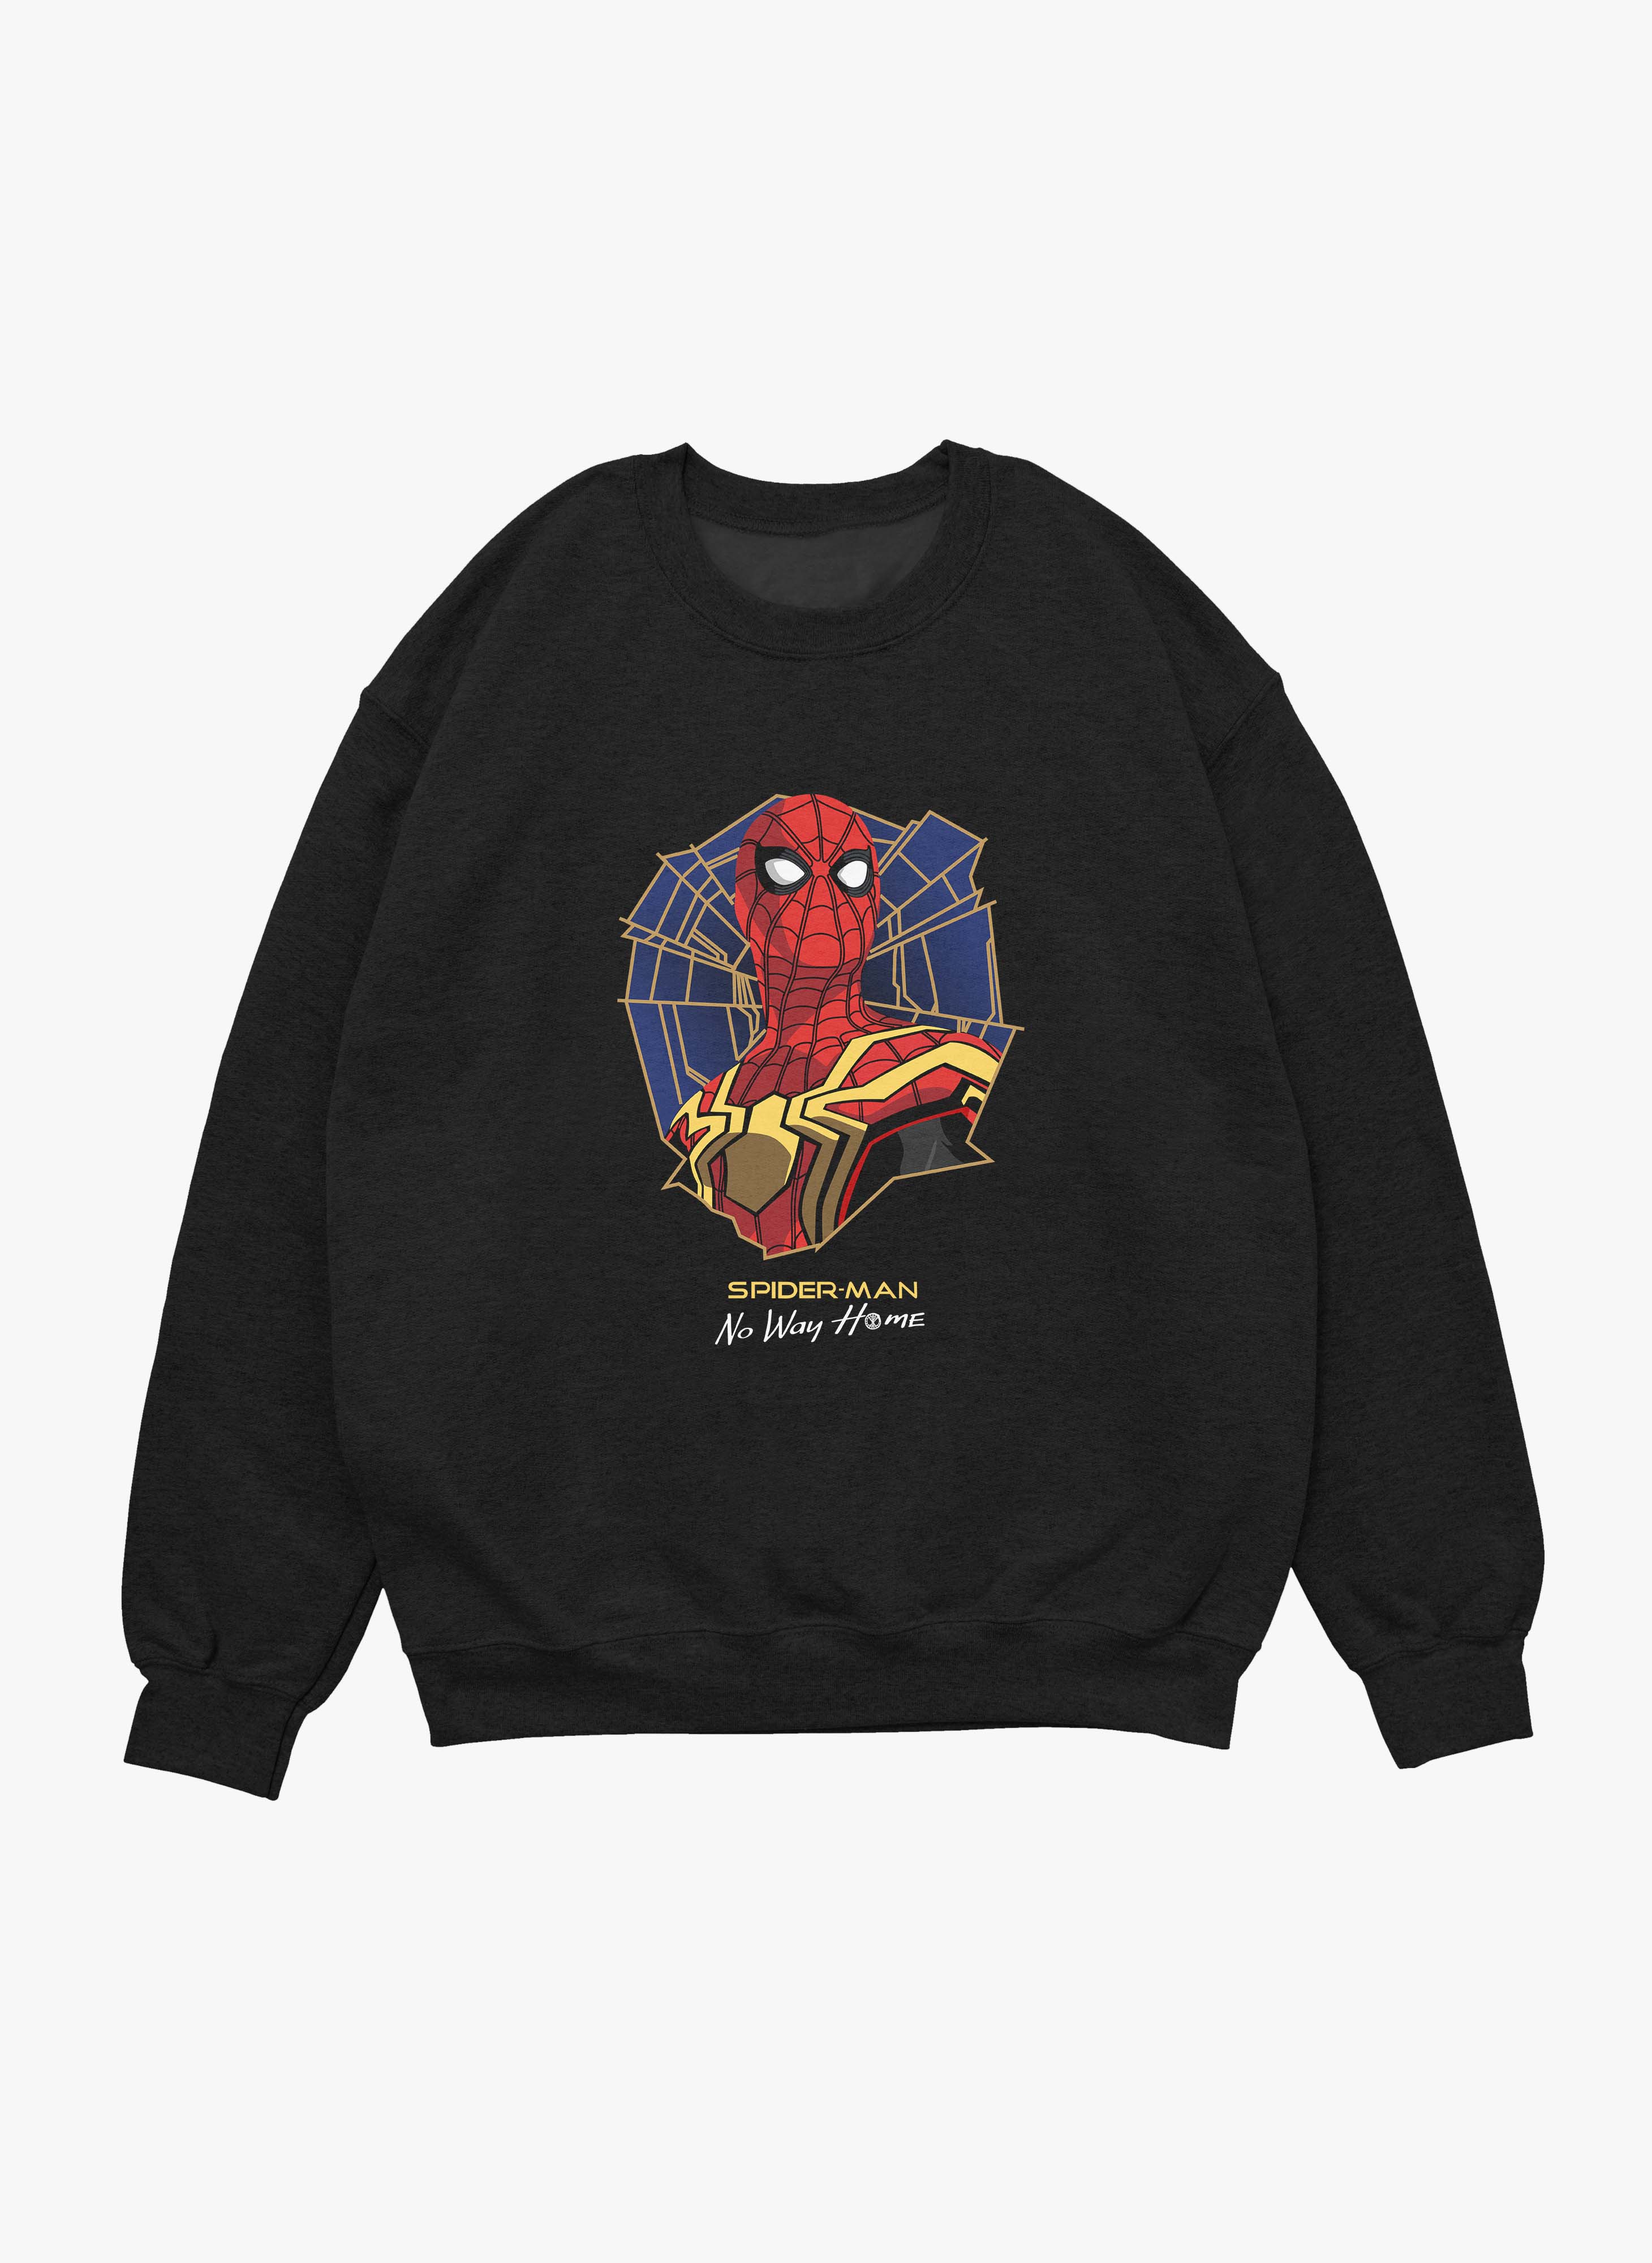 SpiderMan NWH Unisex Sweatsthirt | Sale